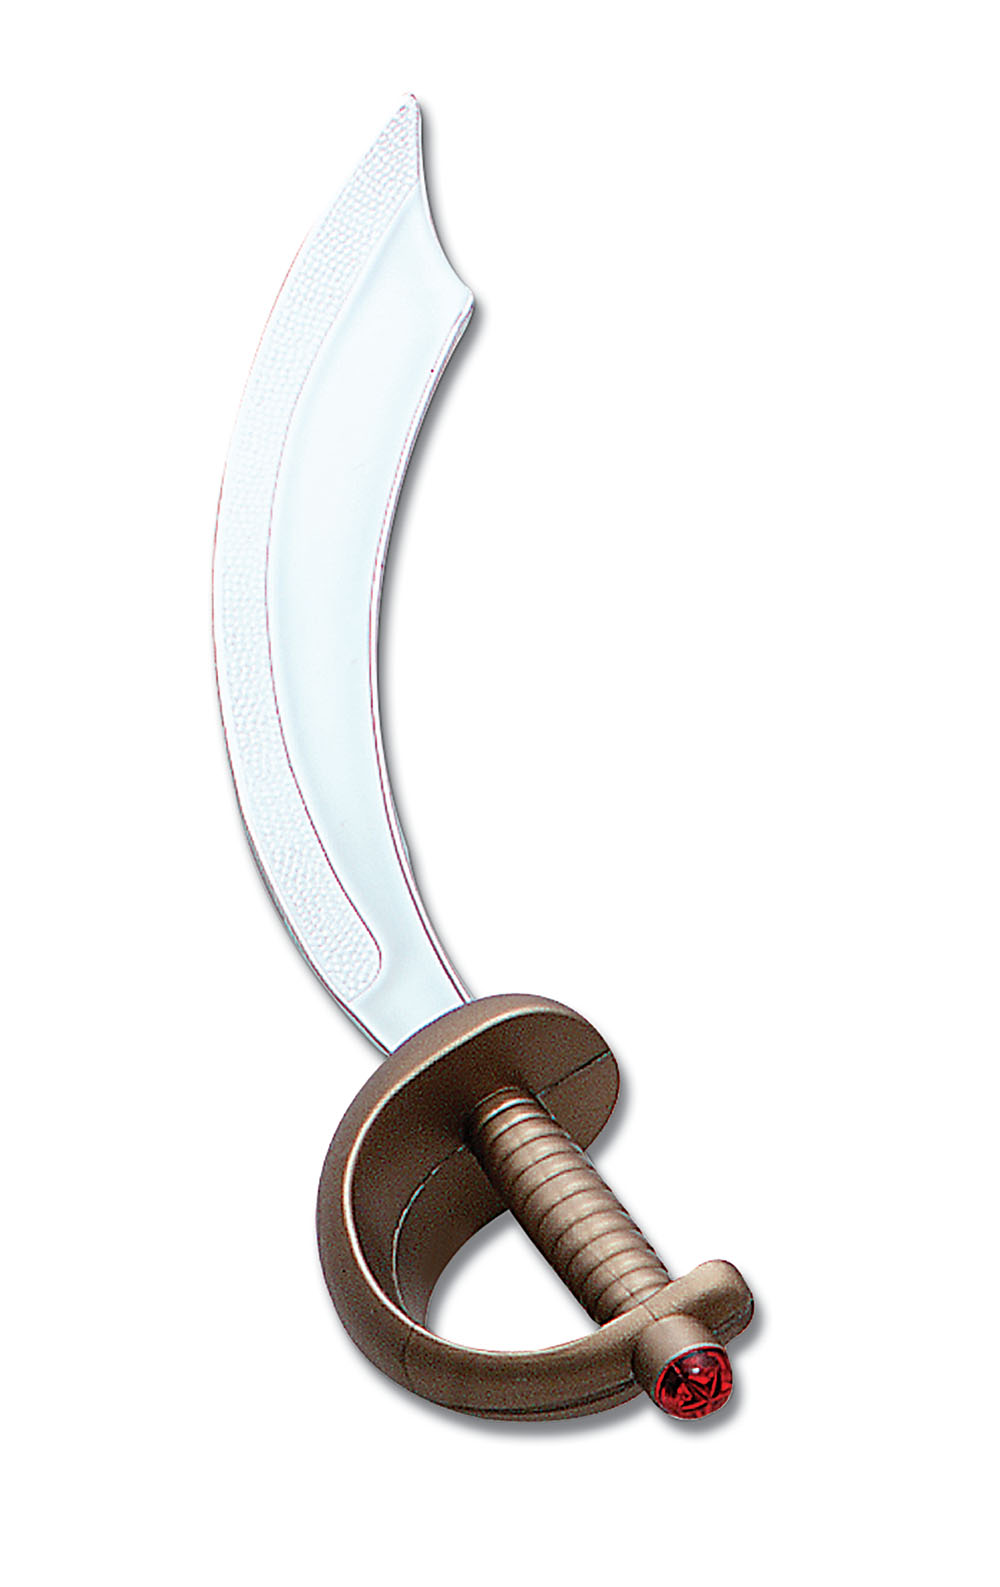 Arabian Sword. Gold/Silver